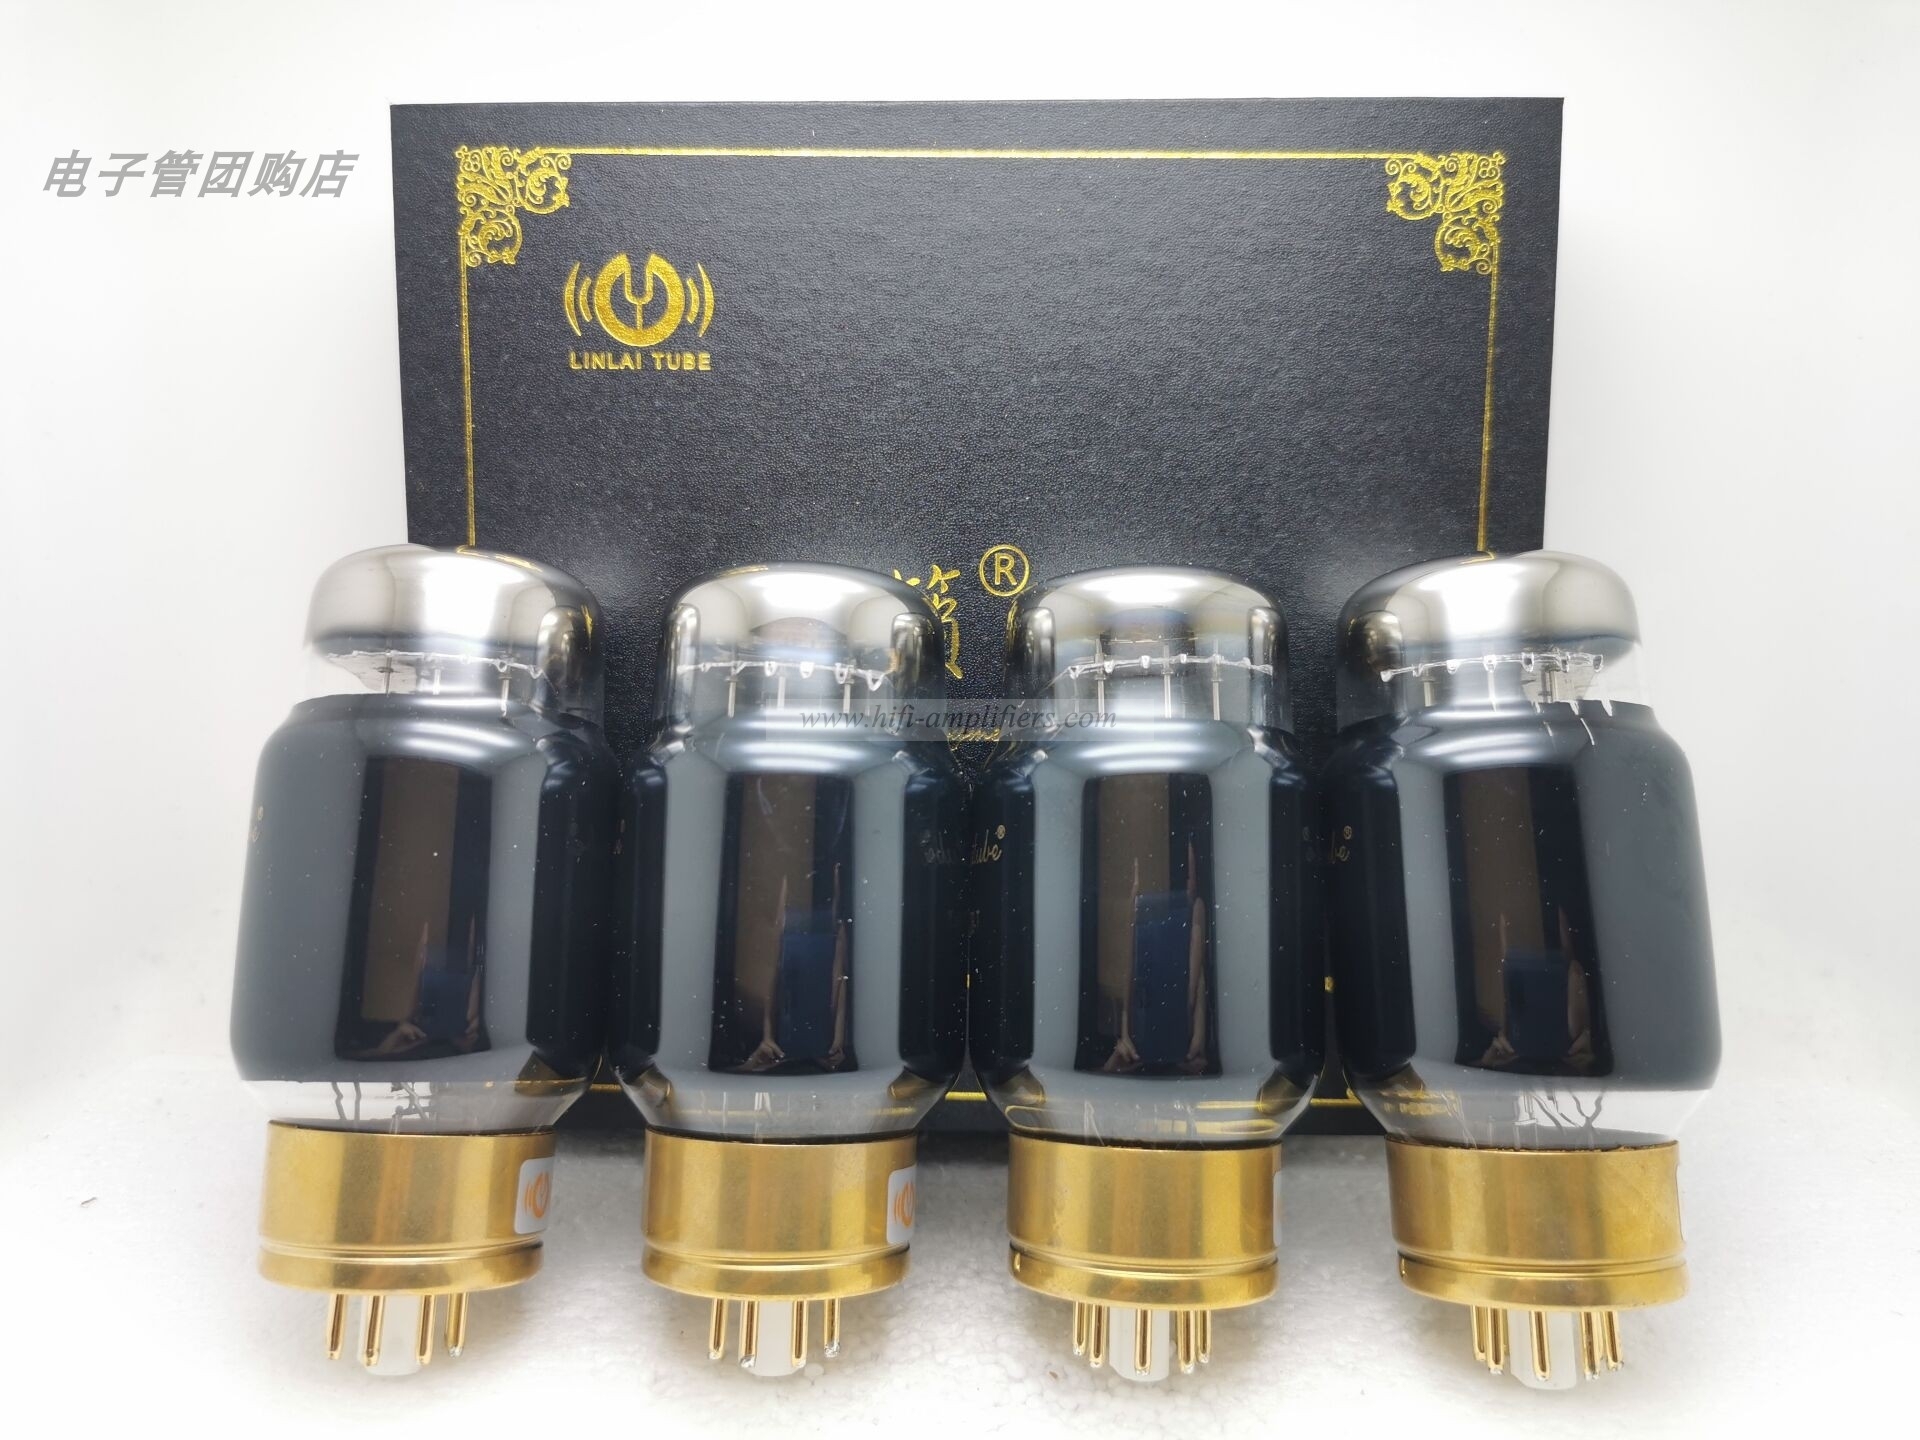 LINLAI 진공관 KT88-T KT88T HIFI 오디오 밸브는 KT88 KT120 6550 전자 튜브 일치 쌍을 대체합니다.